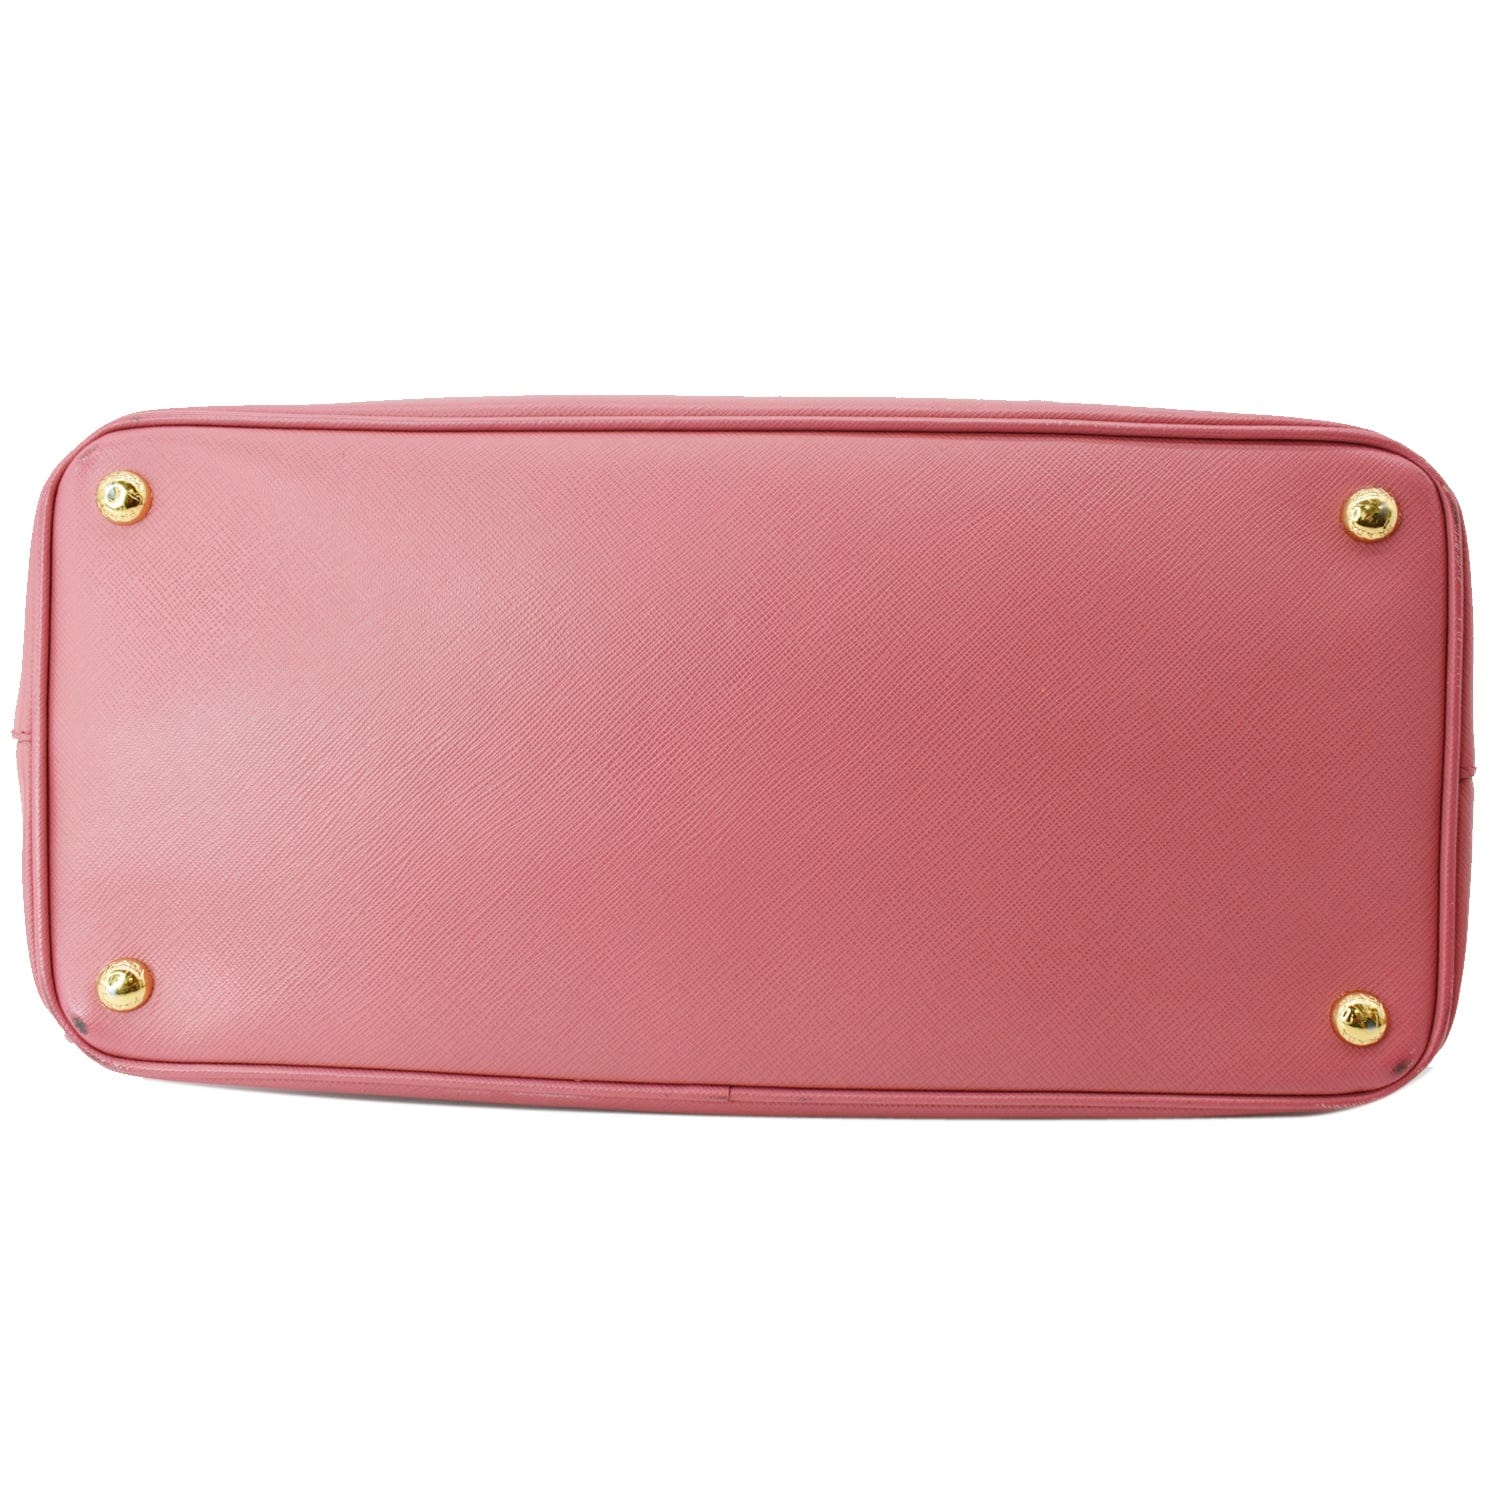 Prada Large Saffiano Lux Galleria Double Zip Tote - Pink Handle Bags,  Handbags - PRA852714